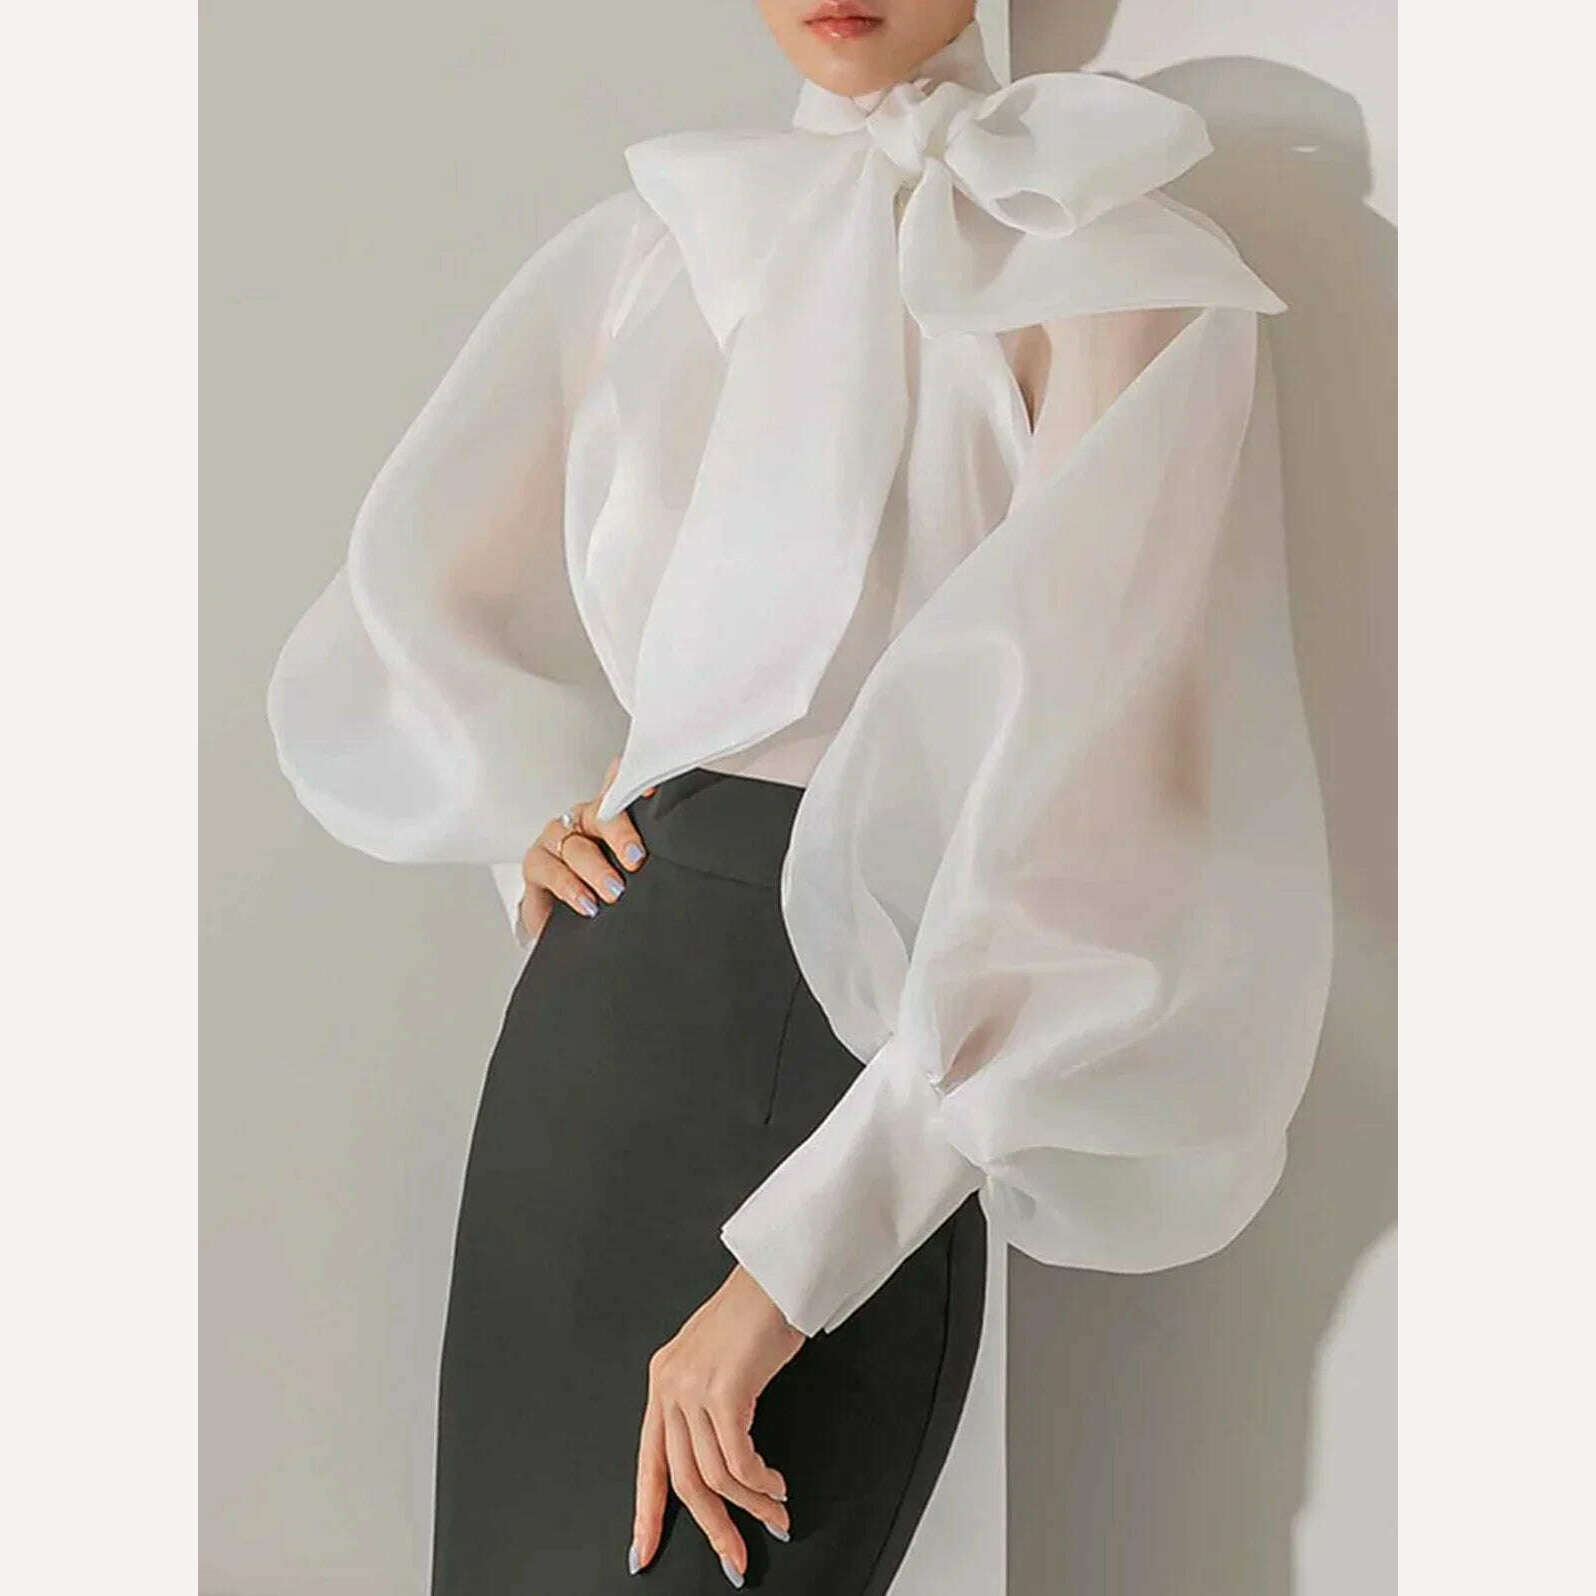 KIMLUD, Women's Elegant Lantern Sleeve Shirt Chiffon Transparent Long Sleeve Sweet Lace-up Neck Polk Dot Casual Fashion Autumn Shirts, White / M / CHINA, KIMLUD Womens Clothes